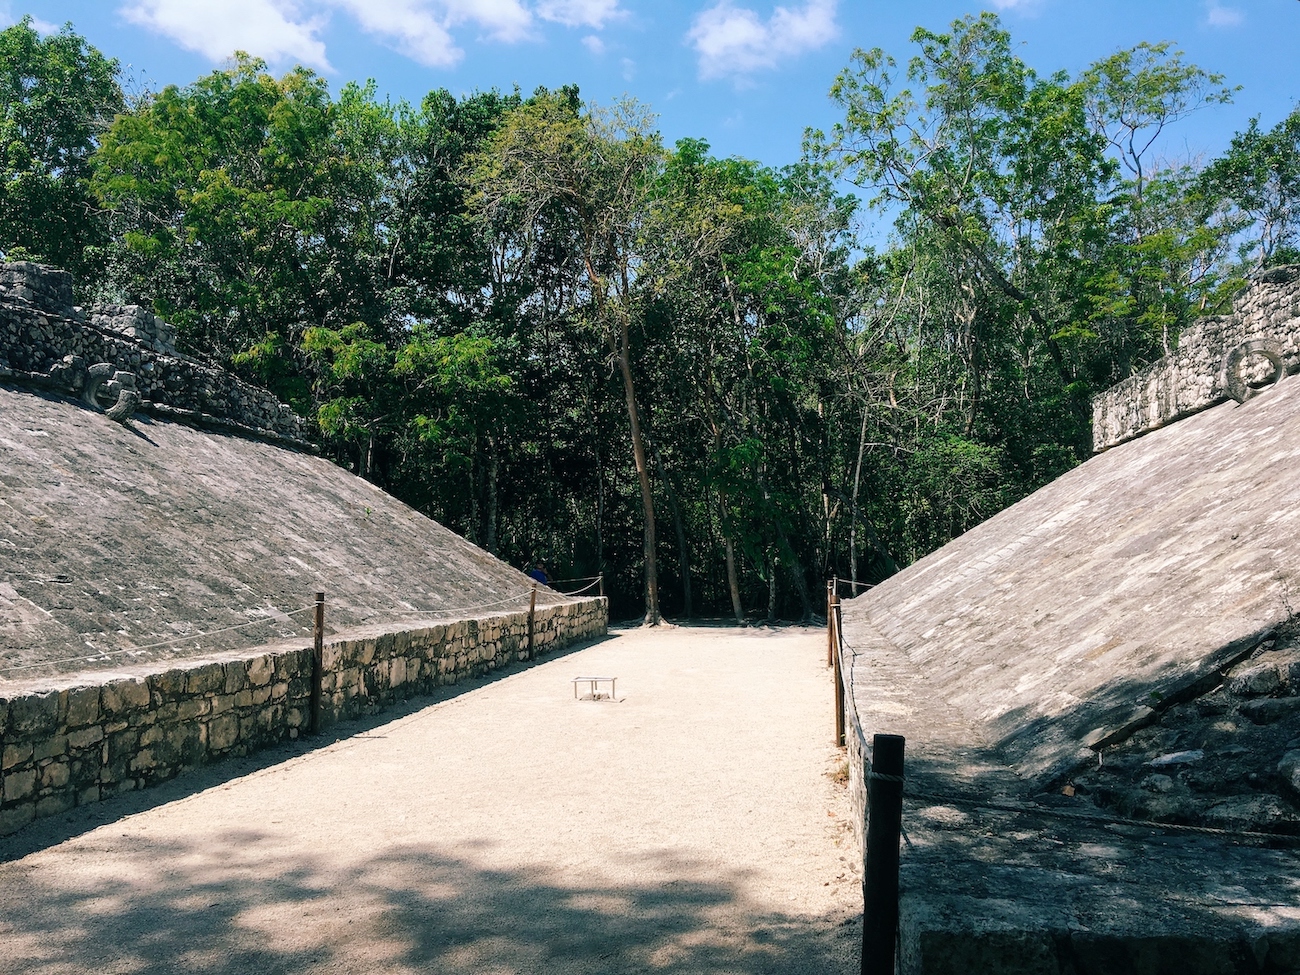 Mayan ball court inside the Coba Ruins